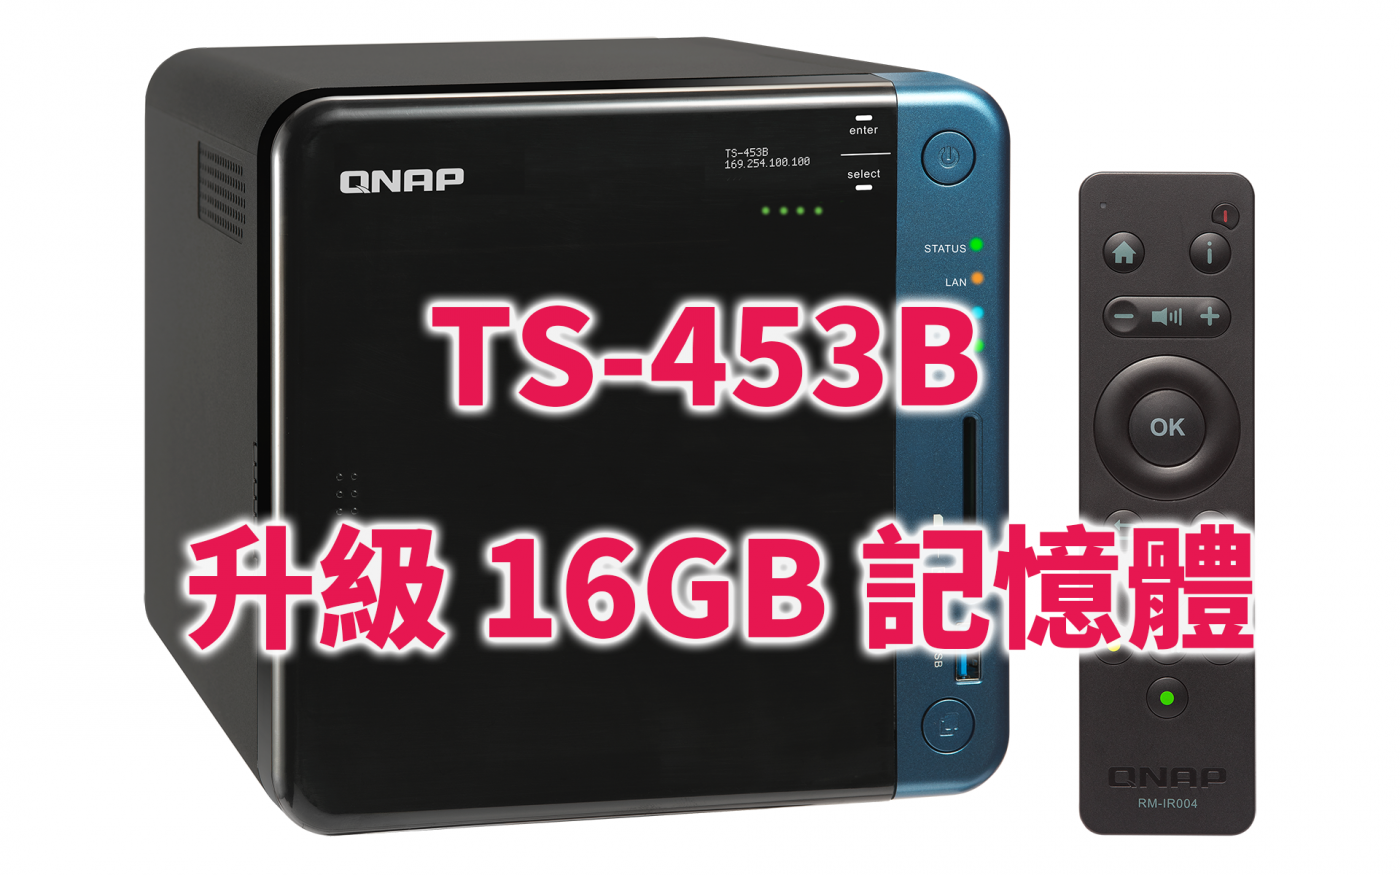 QNAP TS-453B 超量升級 16GB 記憶體成功！（Intel J3455 處理器可支援 16GB 記憶體）@3C 達人廖阿輝